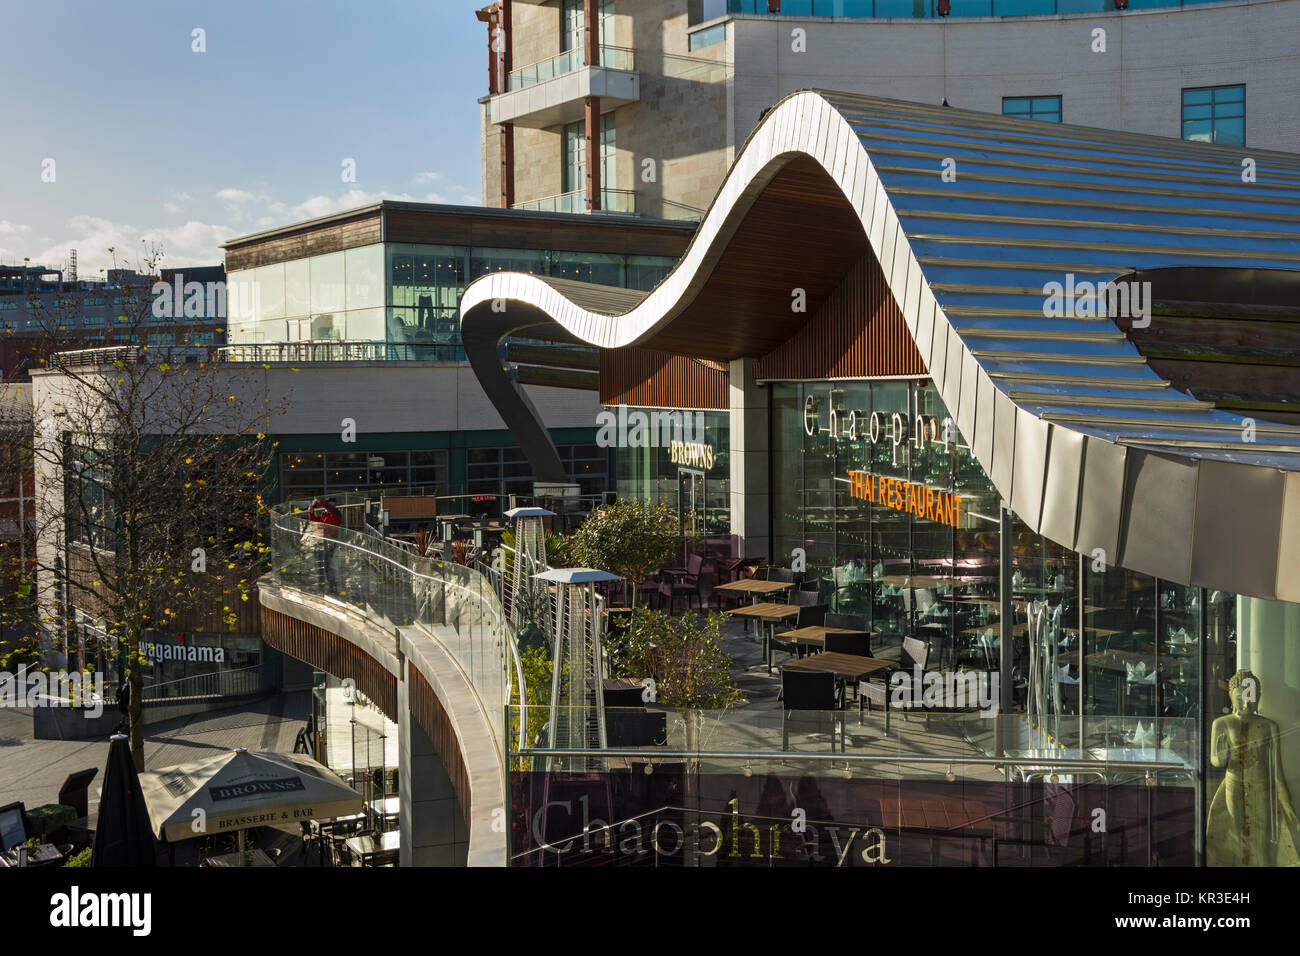 The Chaophraya Thai restaurant building, overlooking the Bull Ring, Birmingham, England, UK Stock Photo